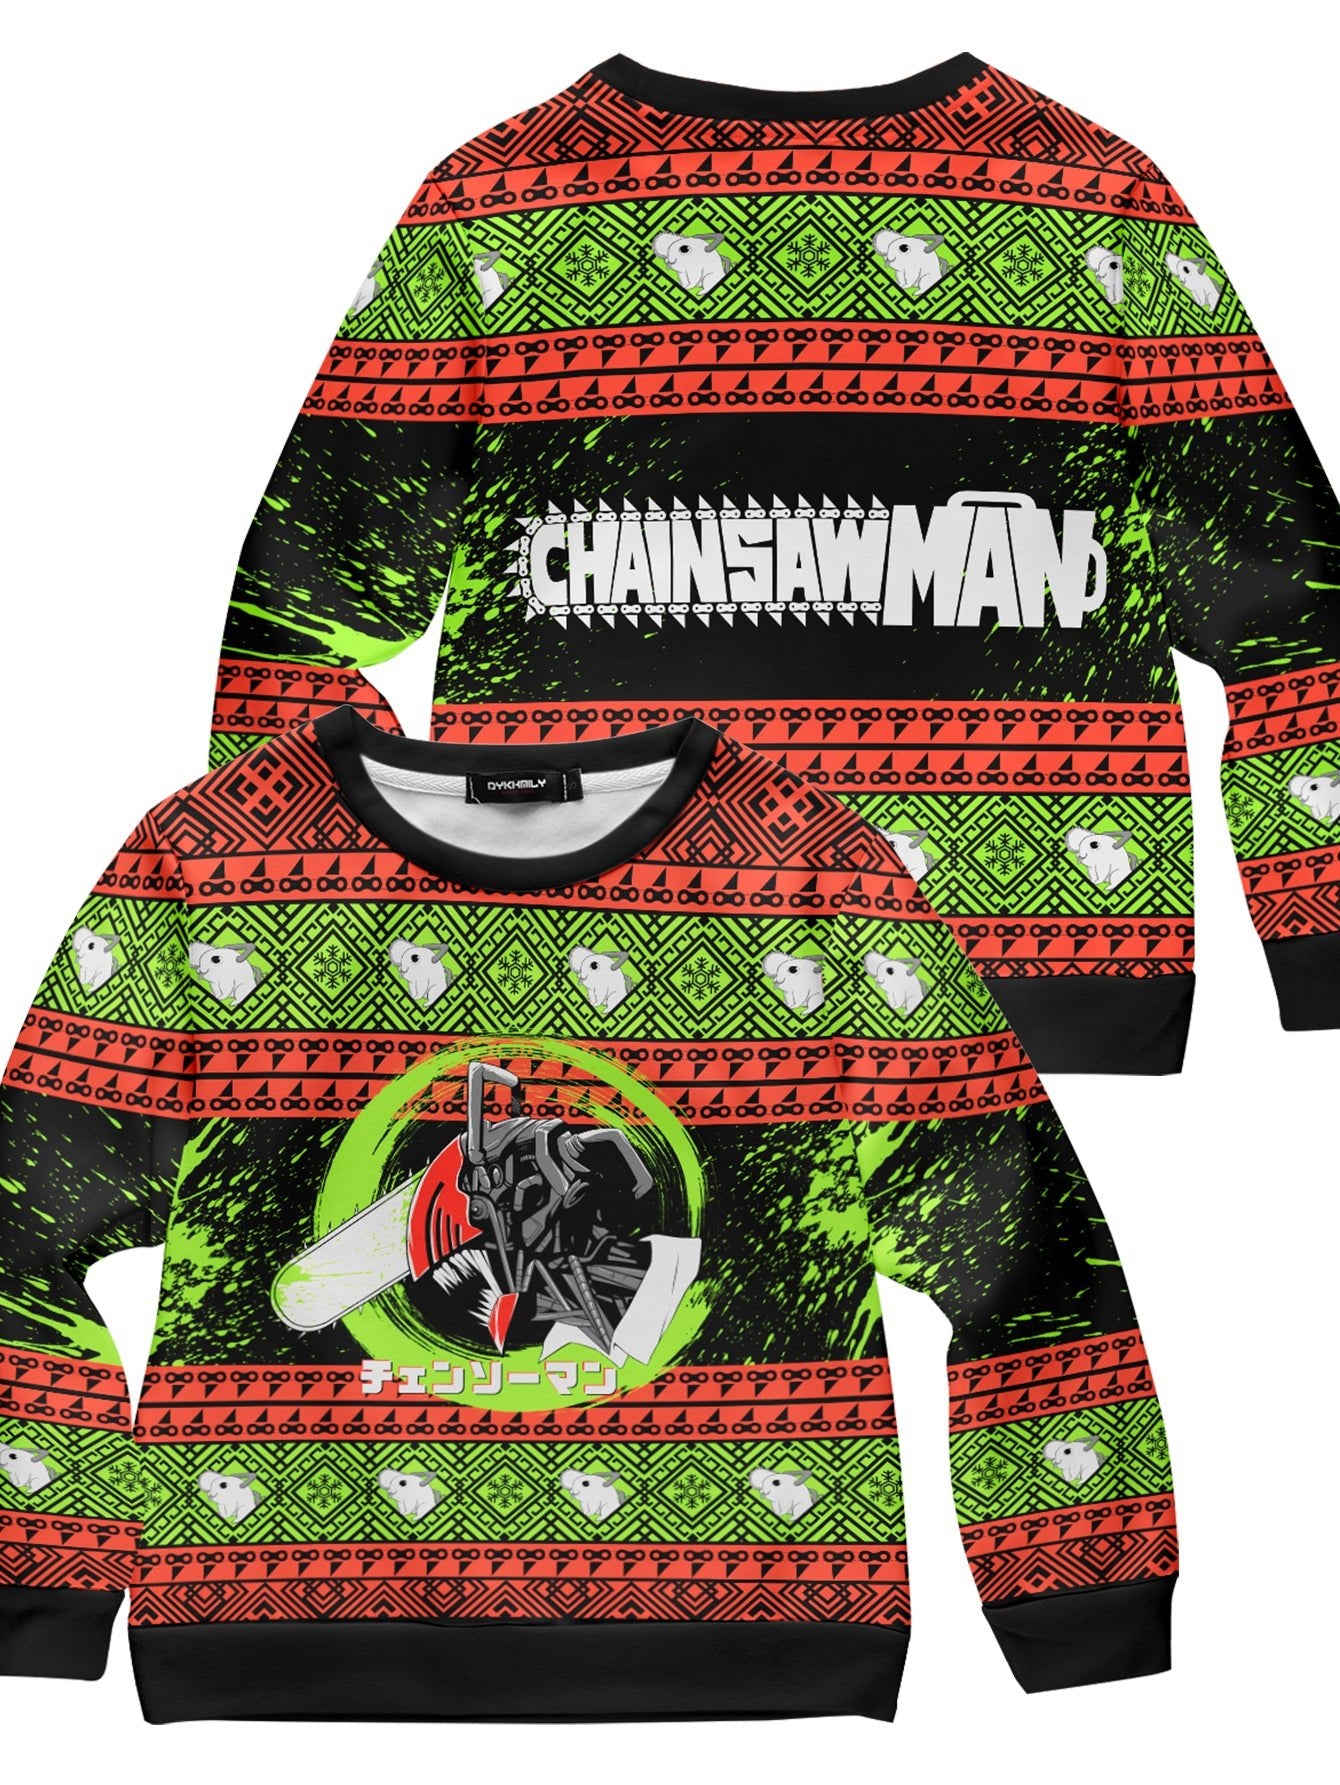 Fandomaniax - Chainsawman Xmas Kids Unisex Wool Sweater